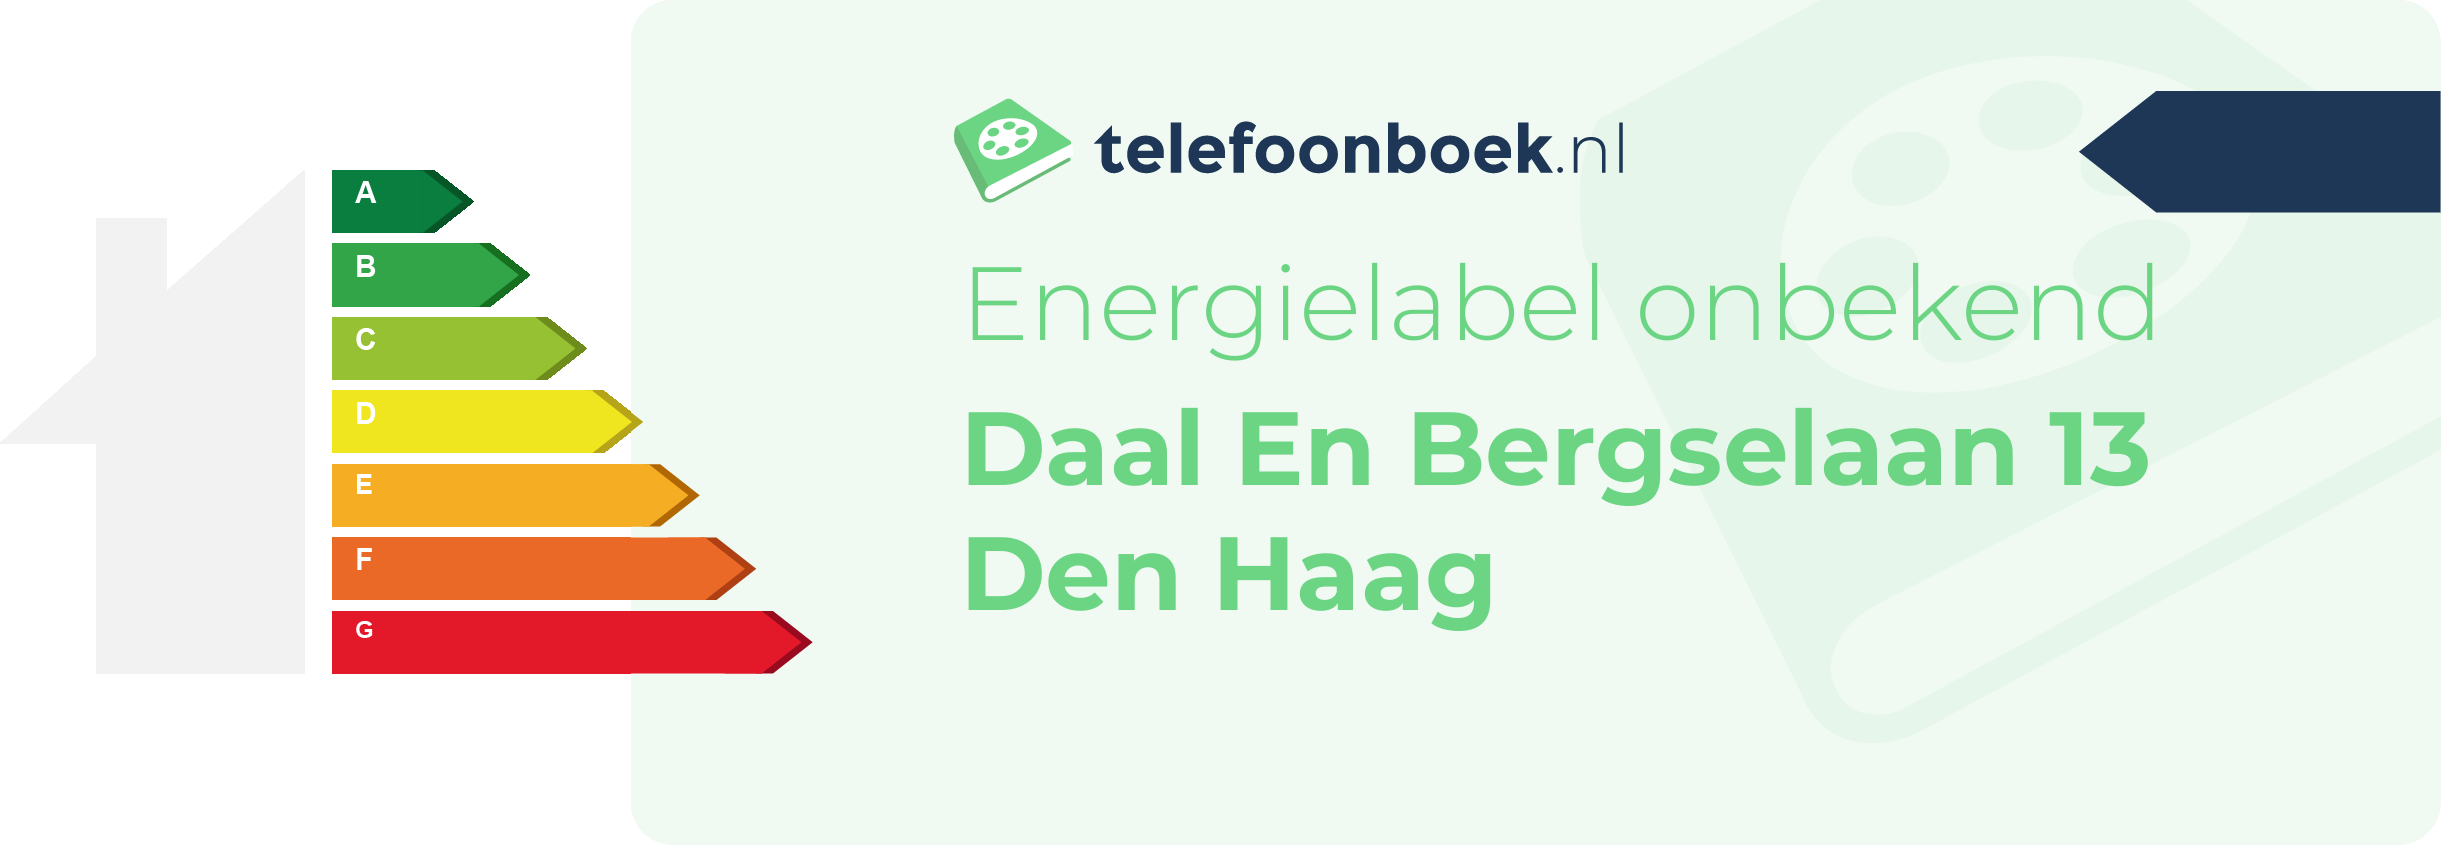 Energielabel Daal En Bergselaan 13 Den Haag